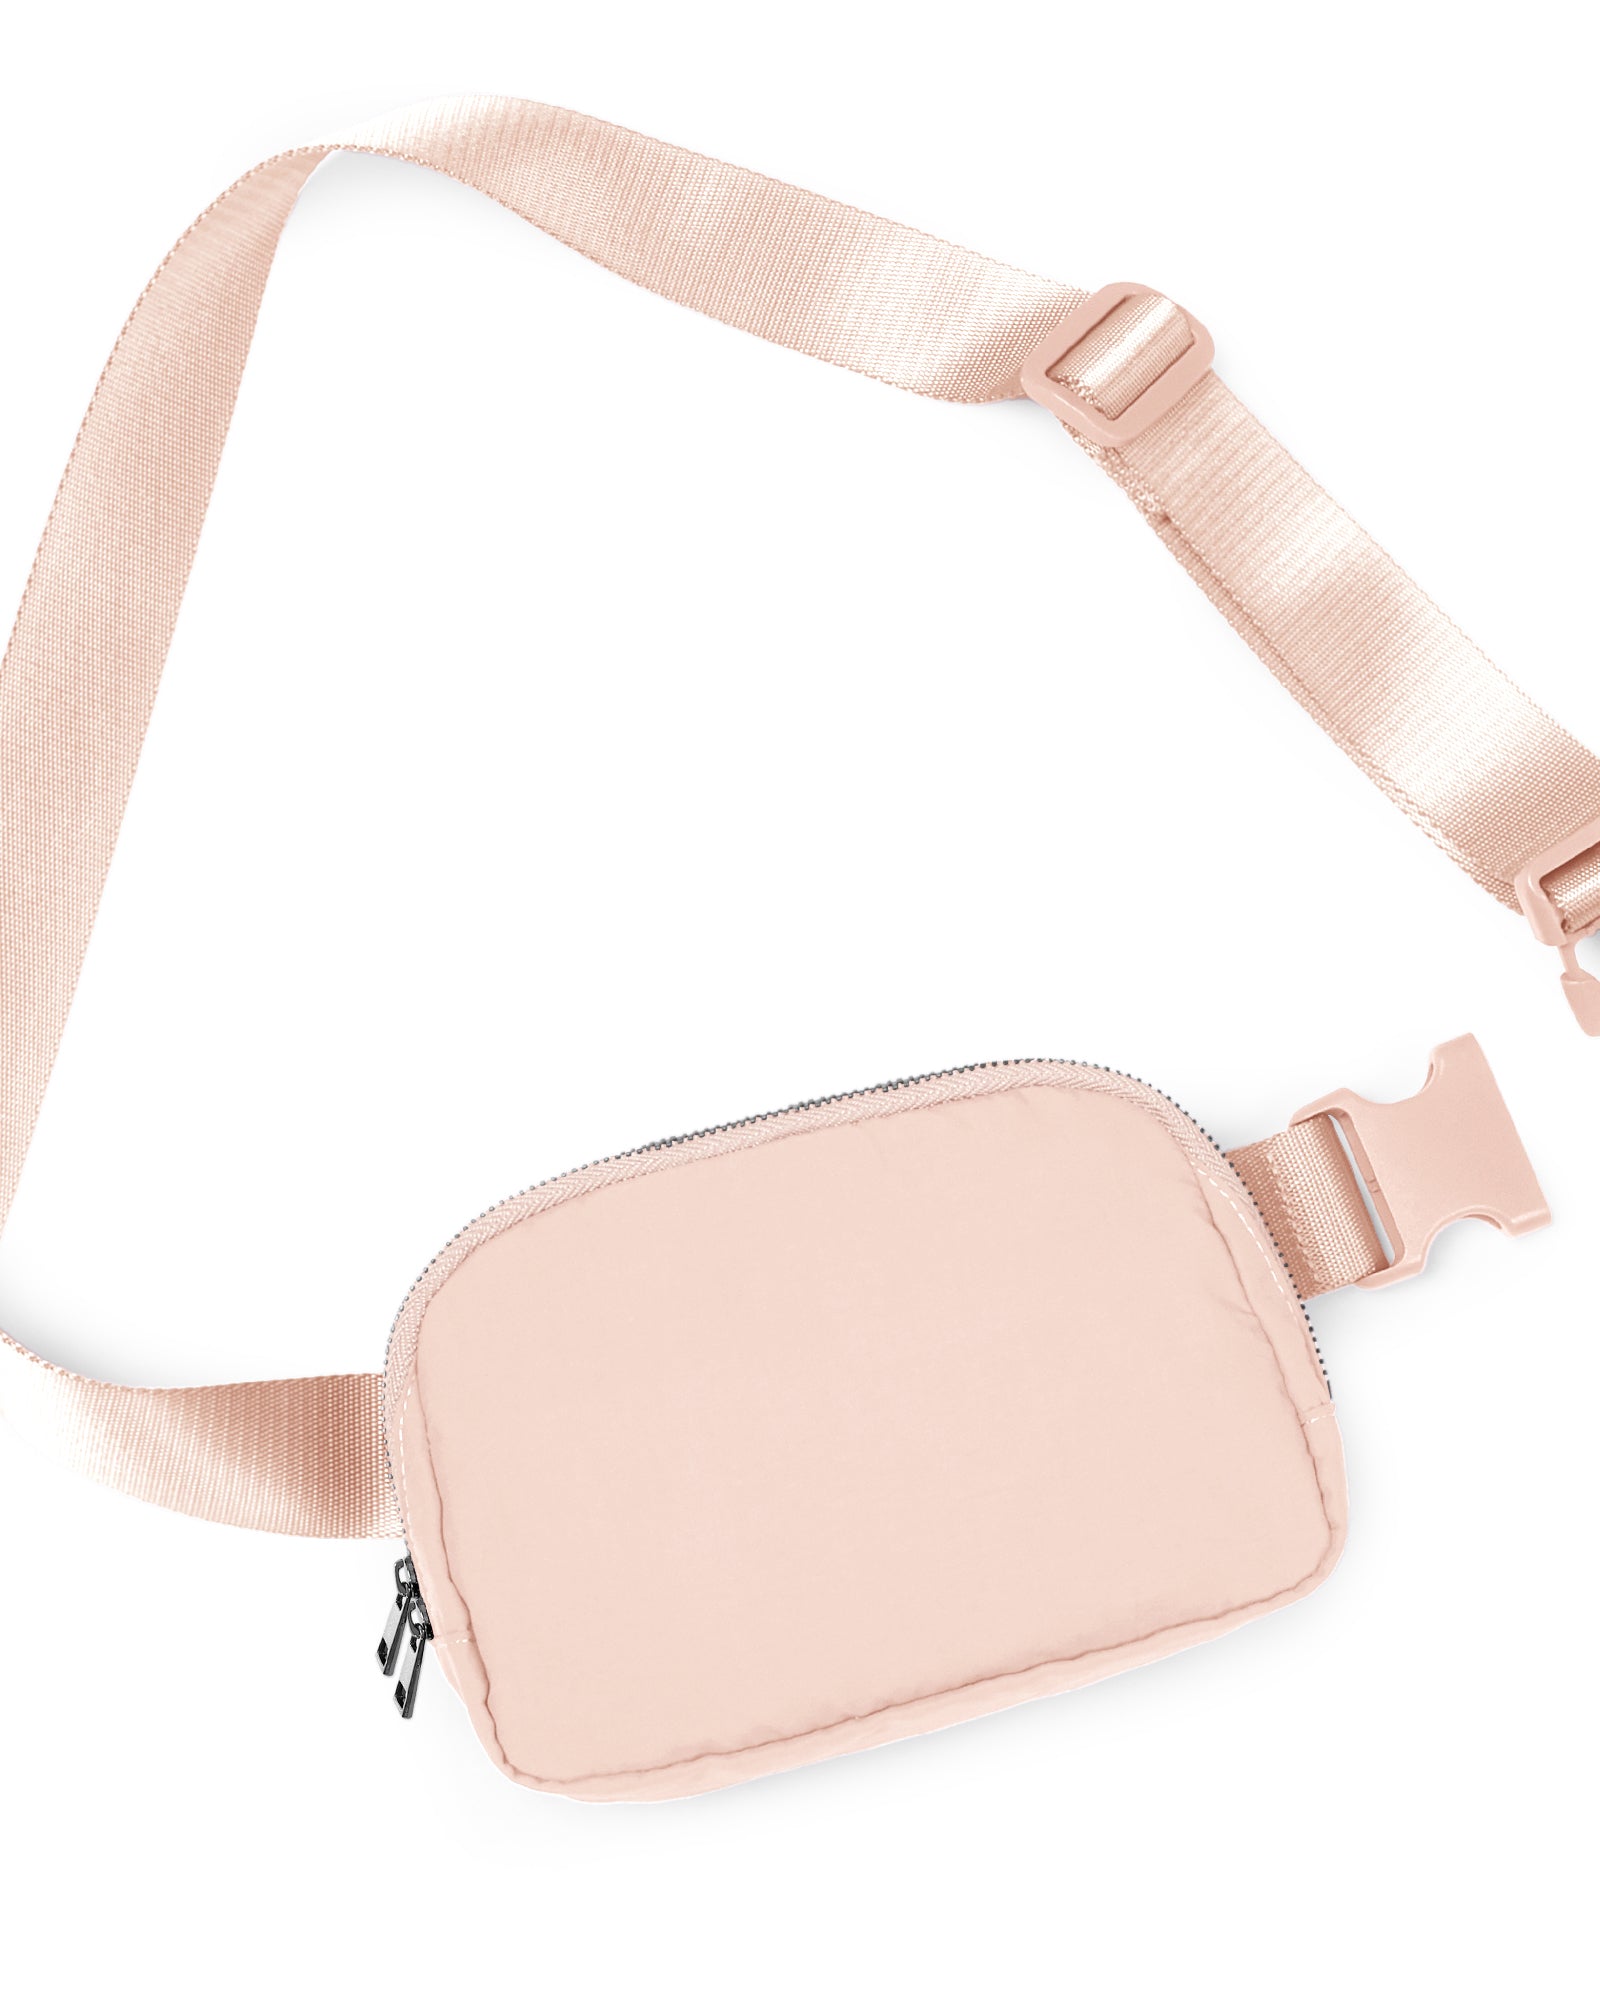 Unisex Two-Way Zip Mini Belt Bag Pale Coral 8" x 2" x 5.5" - ododos